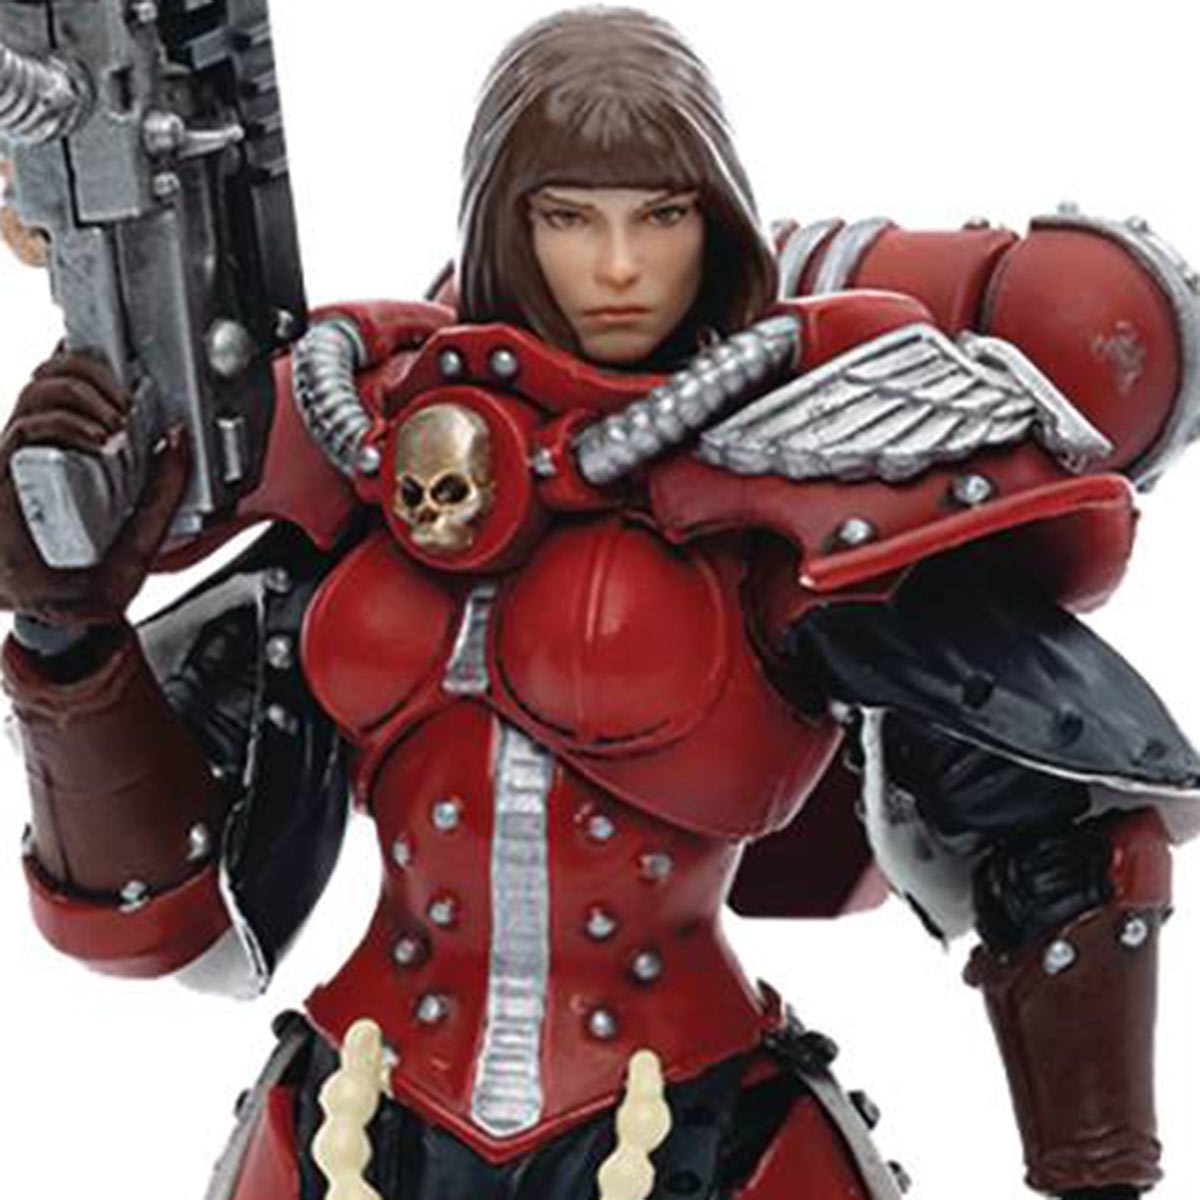 Adepta Sororitas Battle Sister - Order of The Bloody Rose - Warhammer 40k  Merchandise